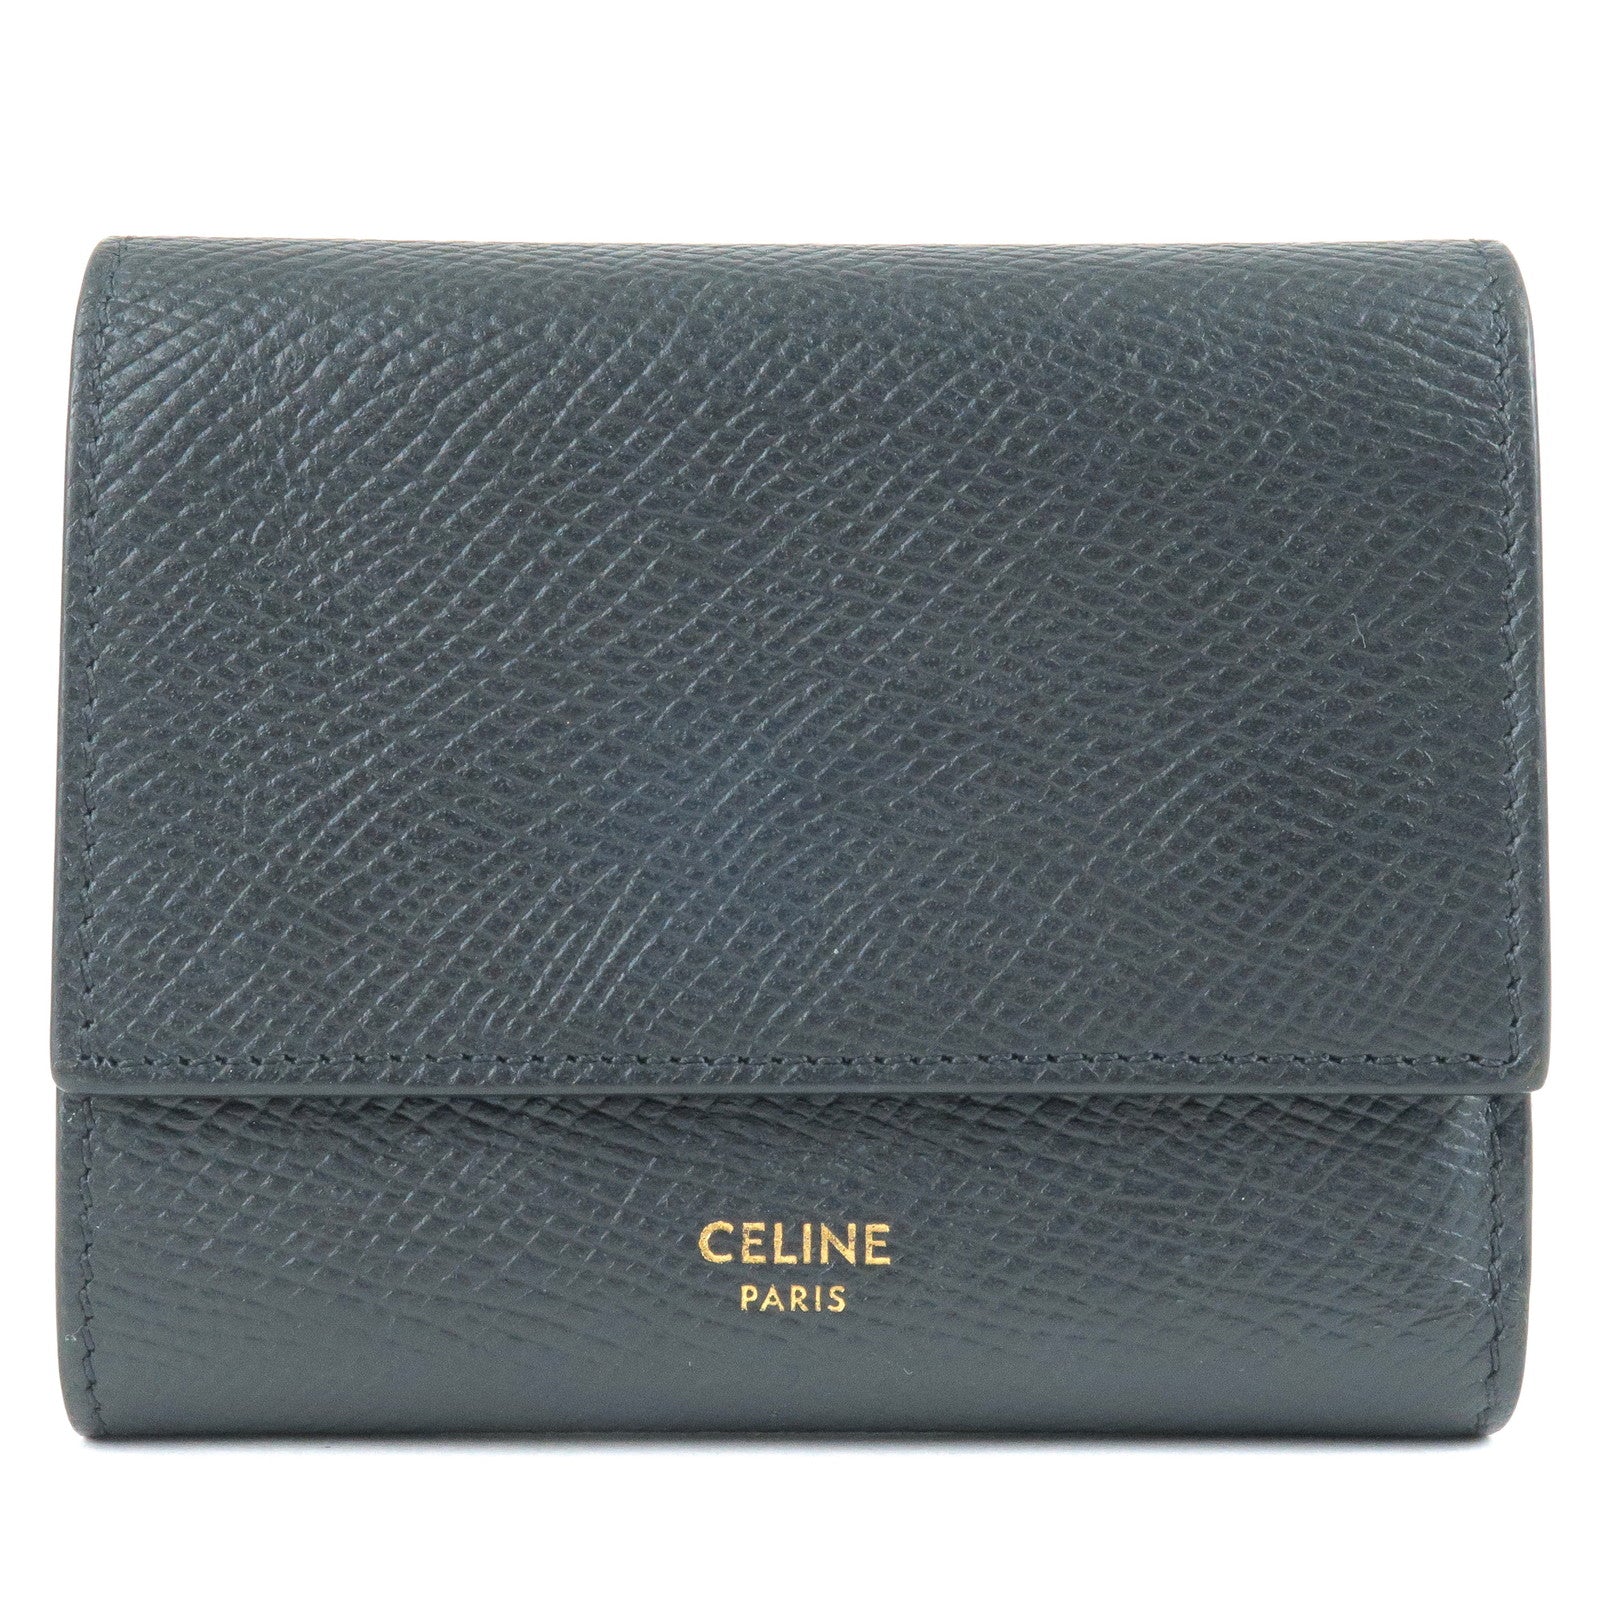 CELINE-Leather-Tri-Folded-Wallet-Small-Wallet-Black